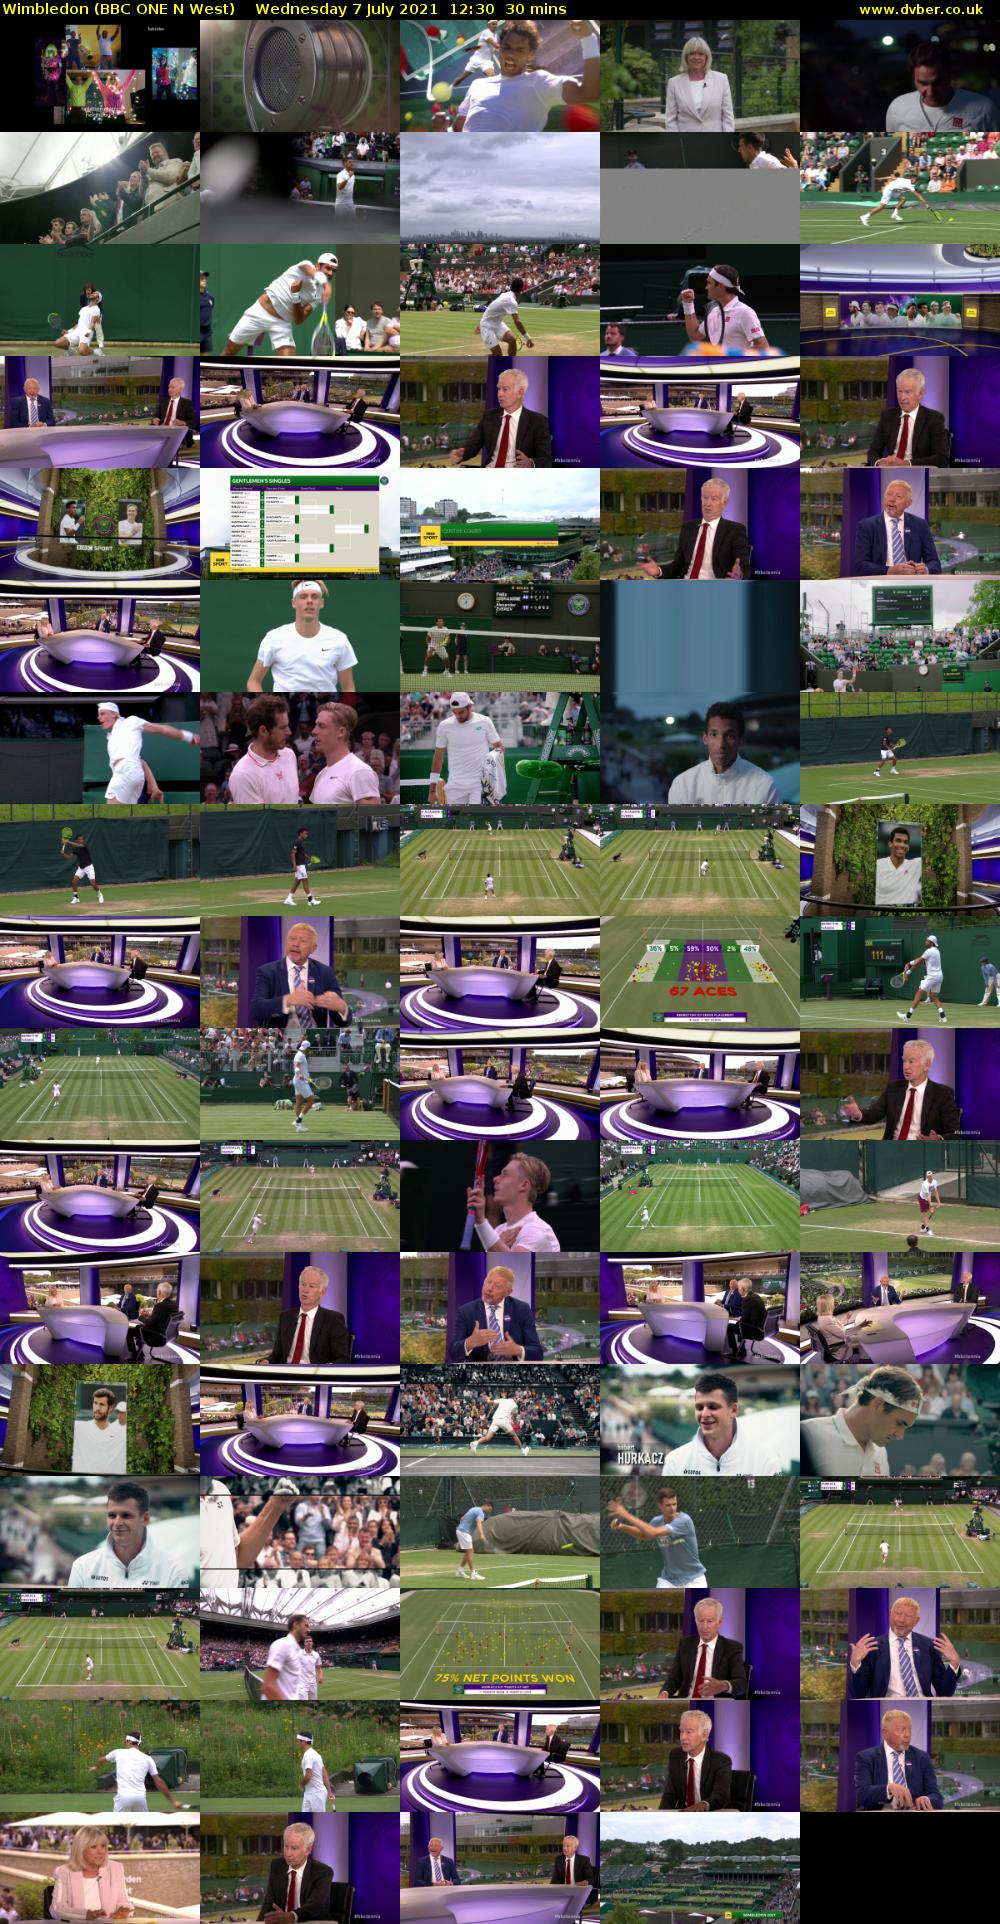 Wimbledon (BBC ONE N West) Wednesday 7 July 2021 12:30 - 13:00